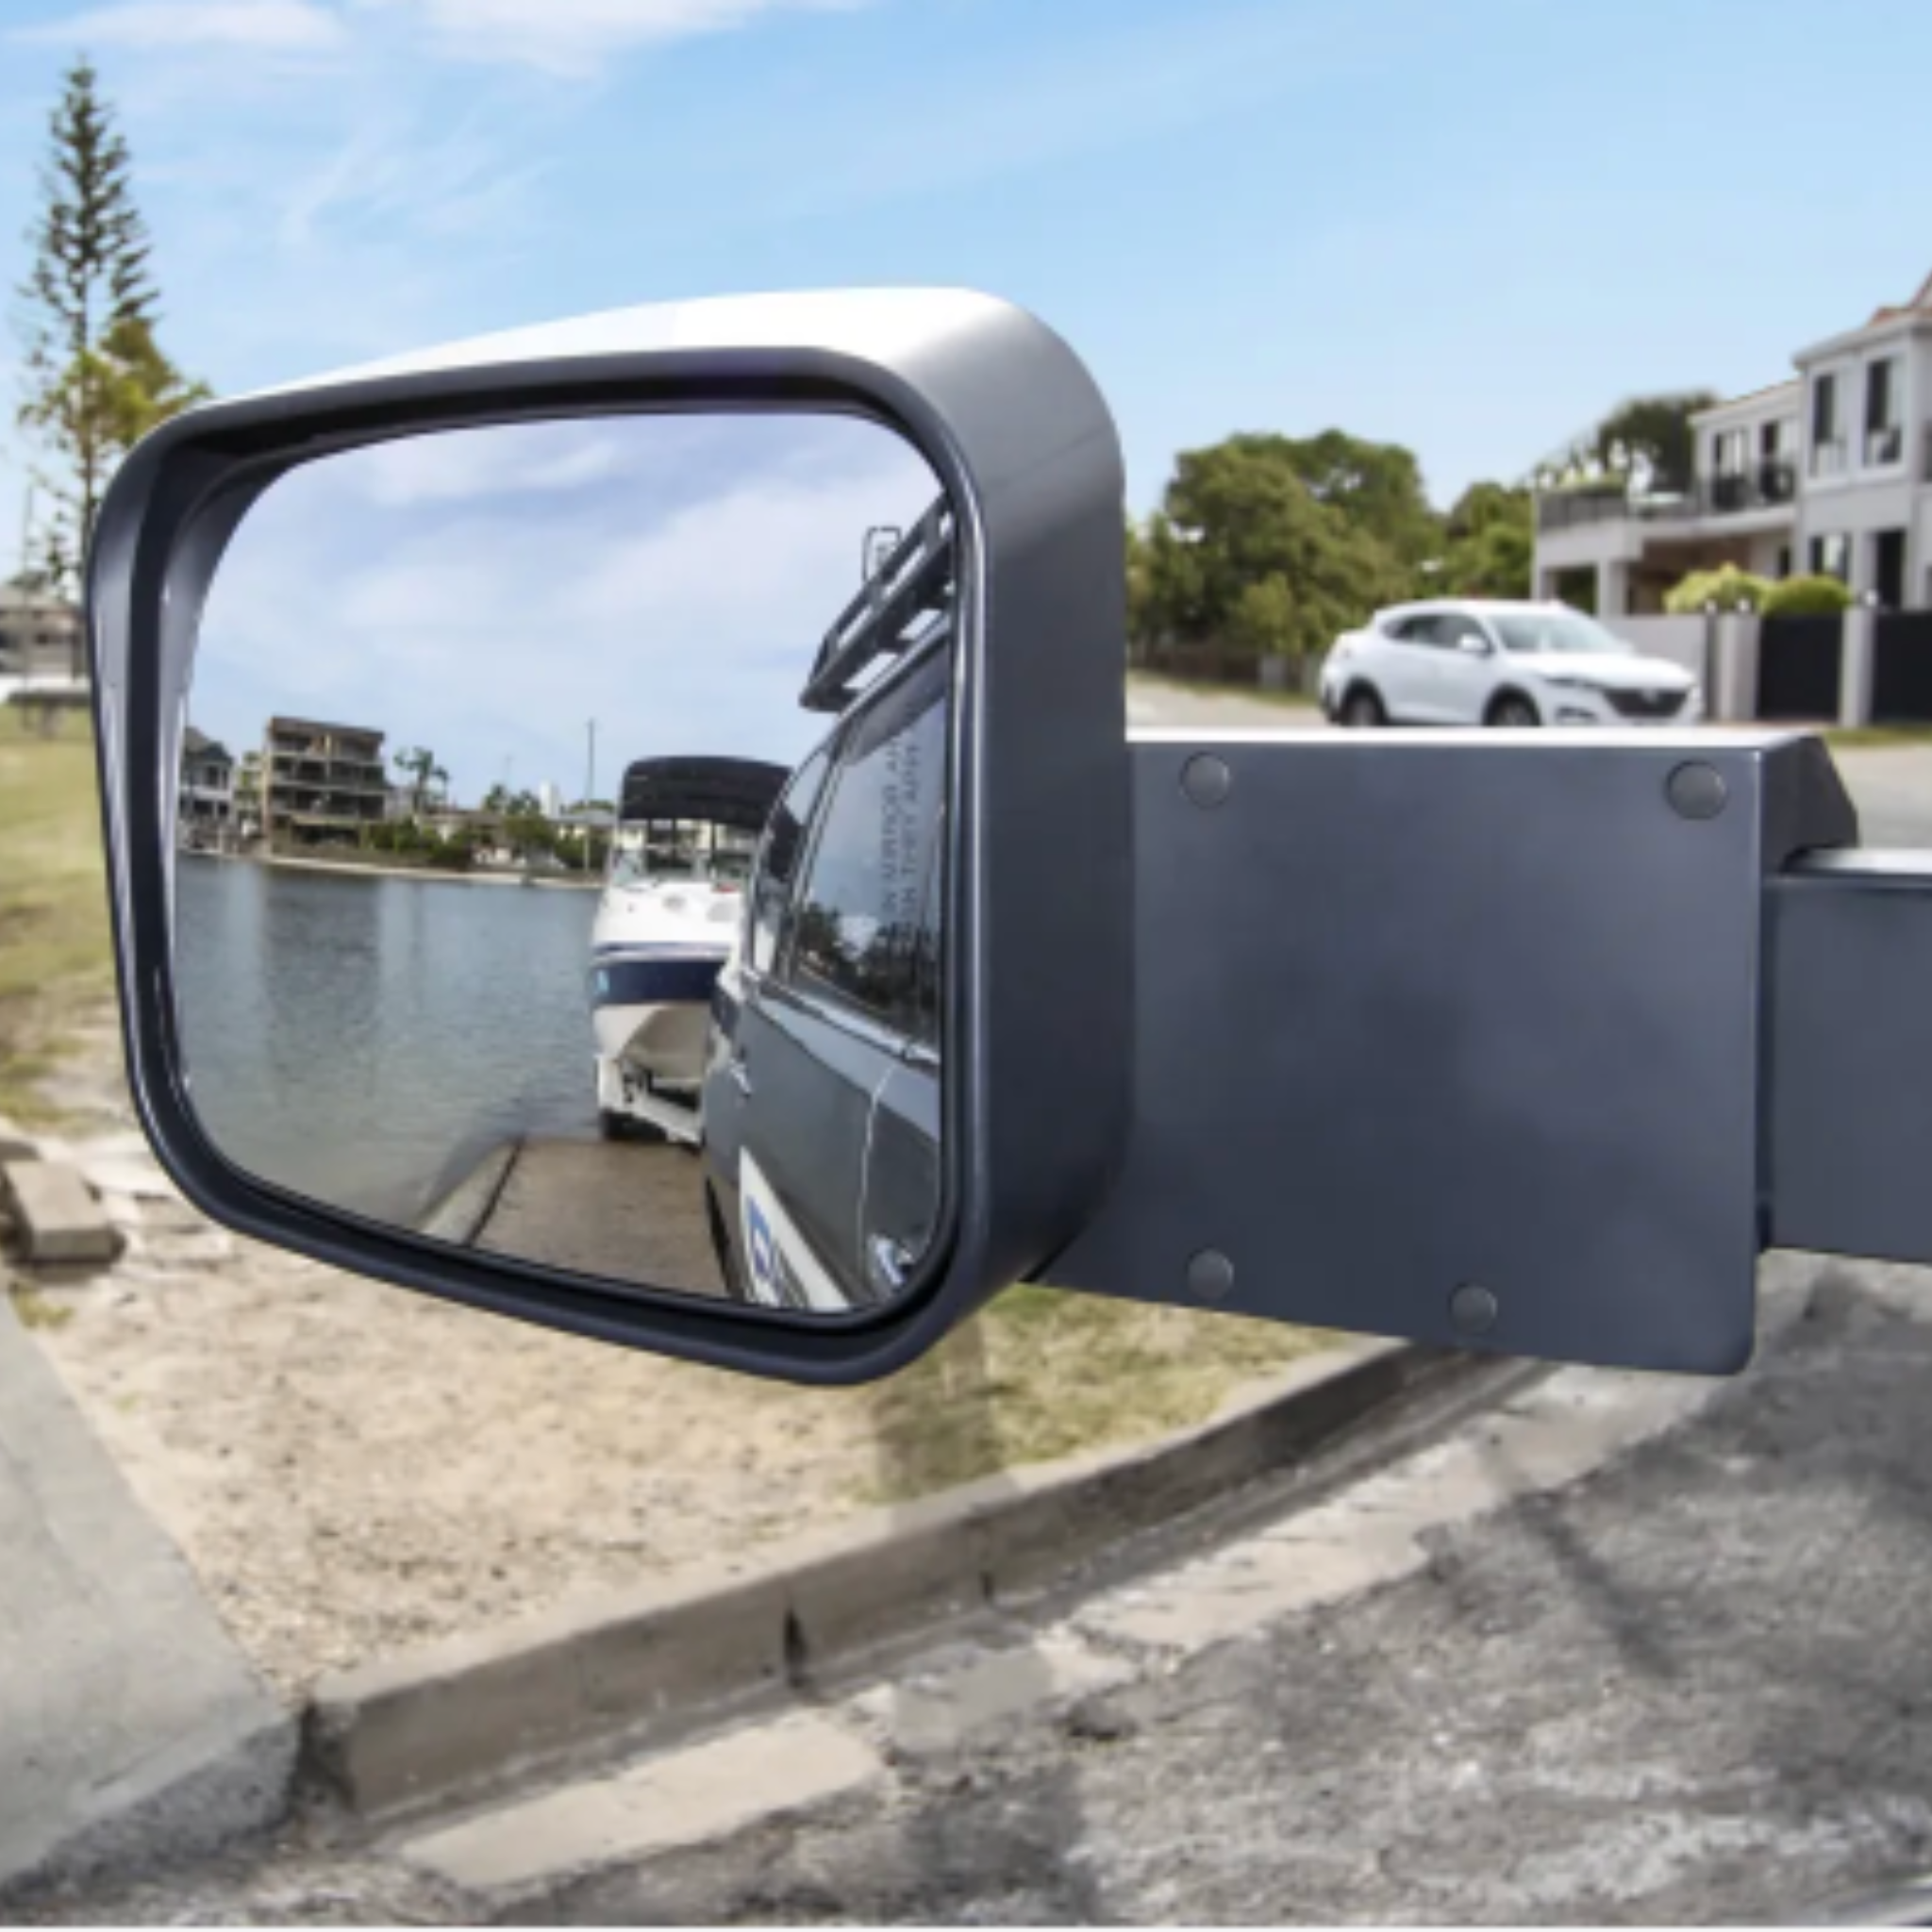 MSA Towing Mirror for Mitsubishi Triton (2015 on) - Electric + Chrome